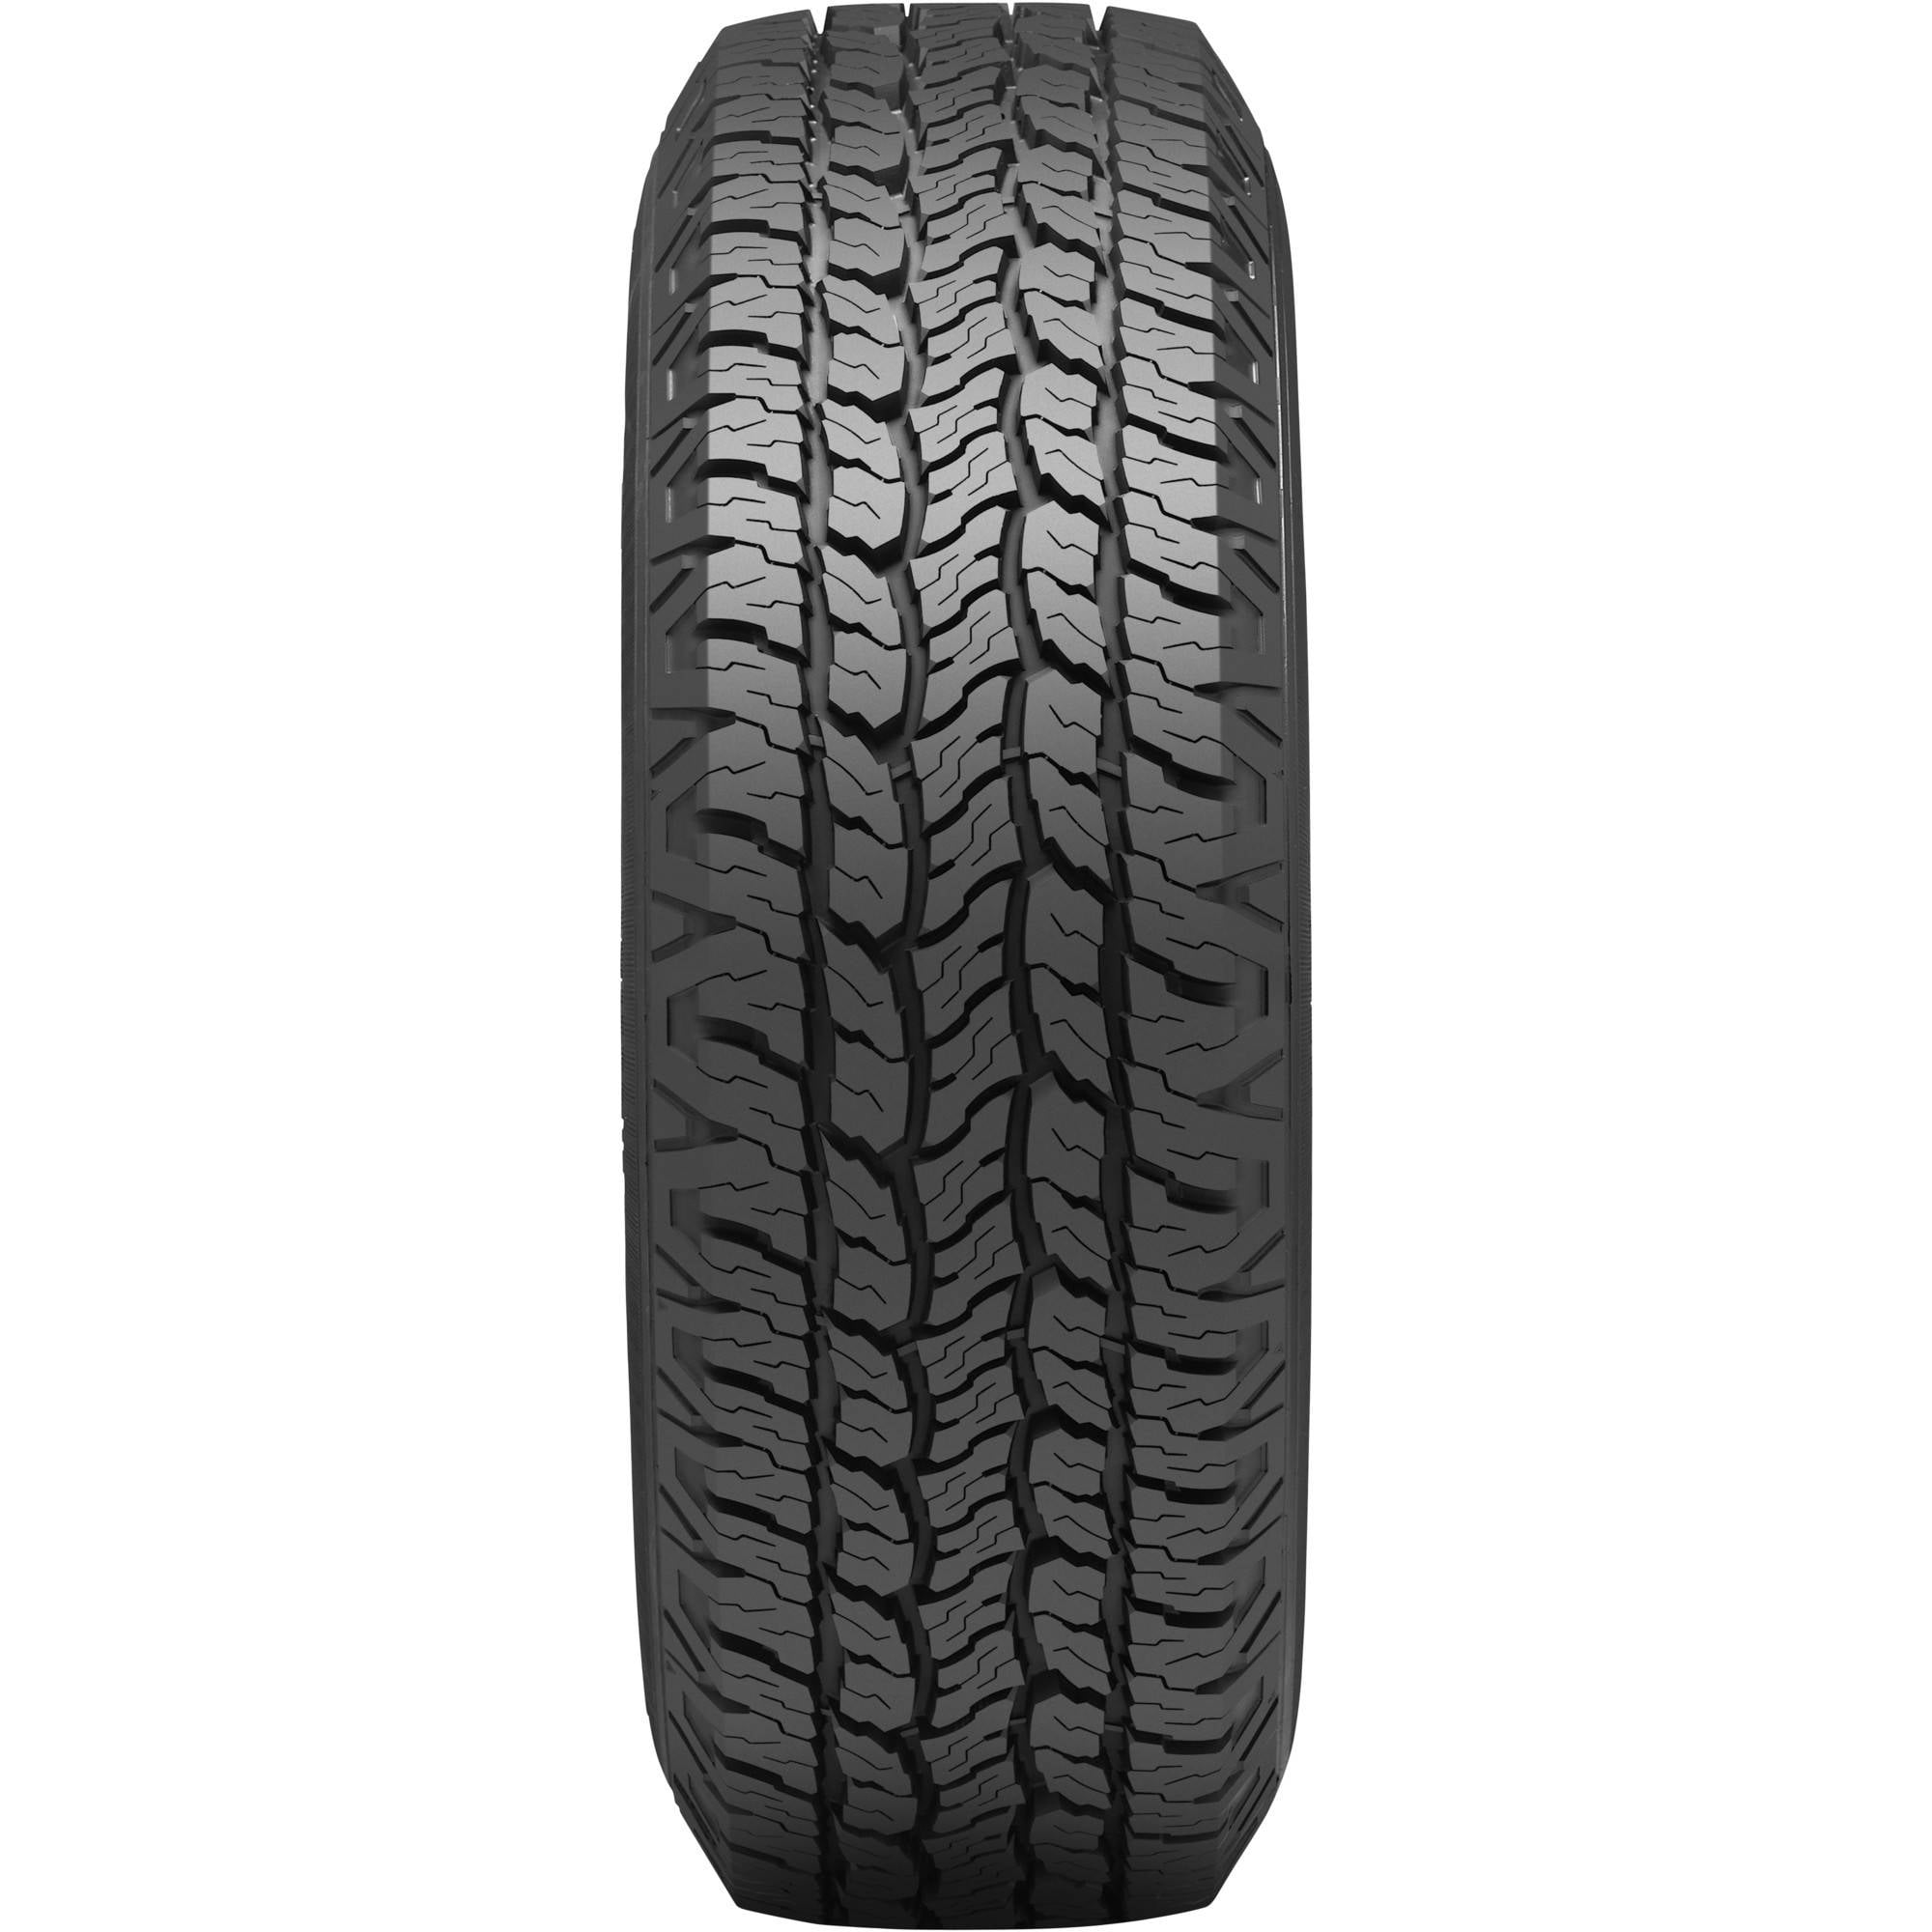 Goodyear Wrangler Trailmark 235/70R16 104T All-Season Tire 